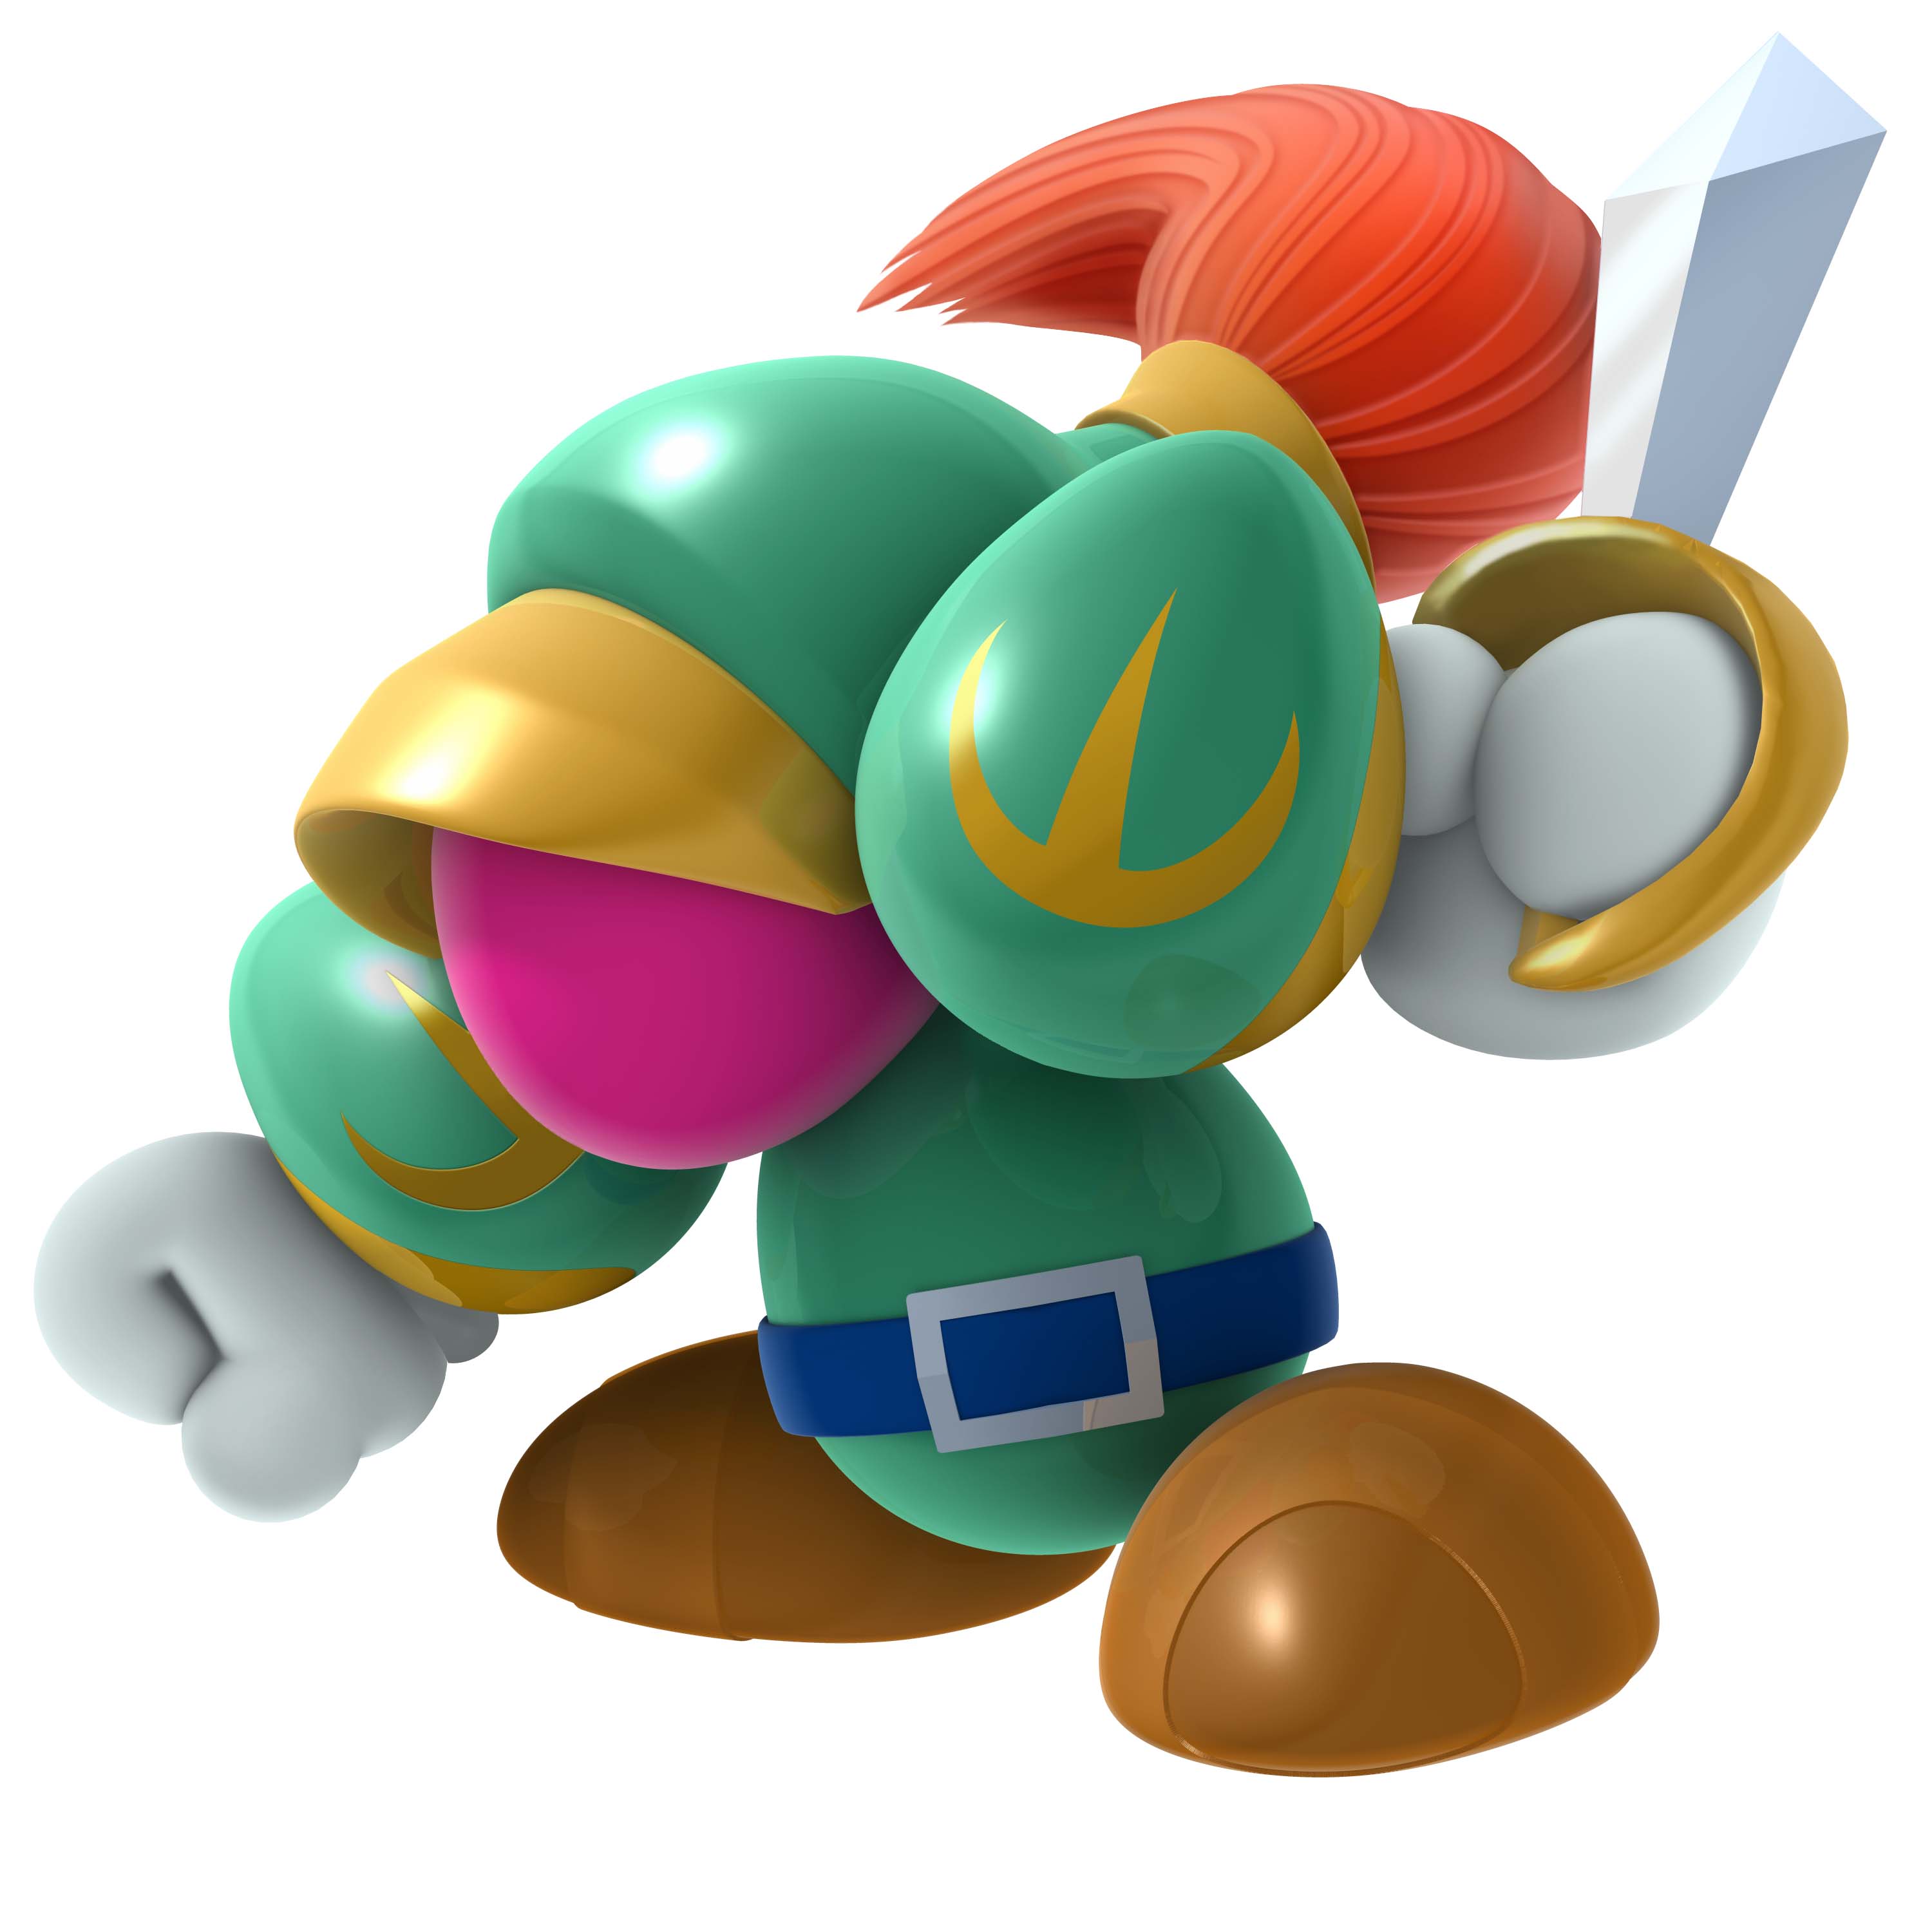 Meta Knight, Kirby Wiki